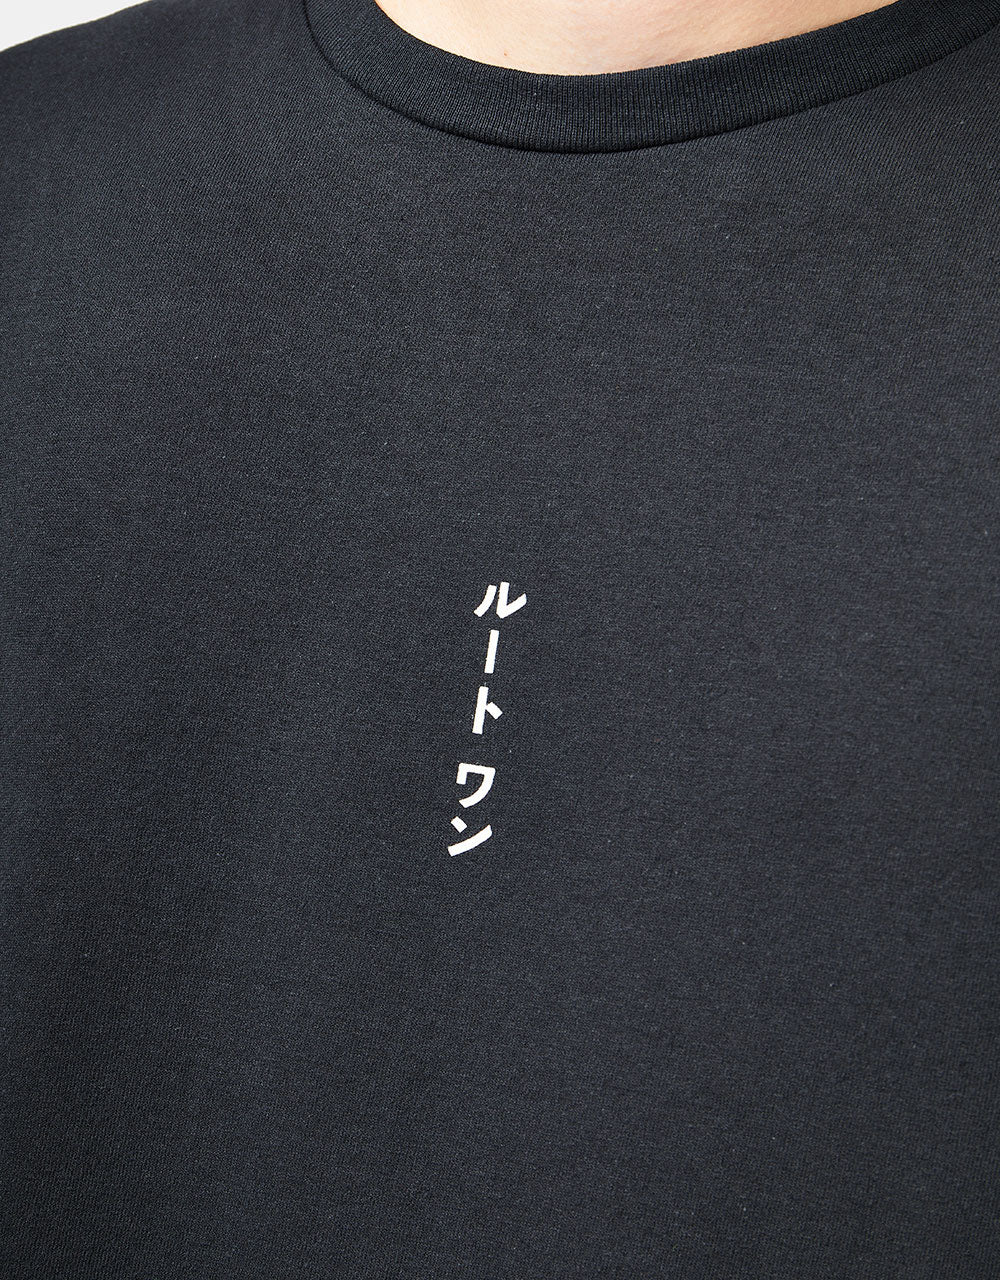 Route One Katakana T-Shirt - Black